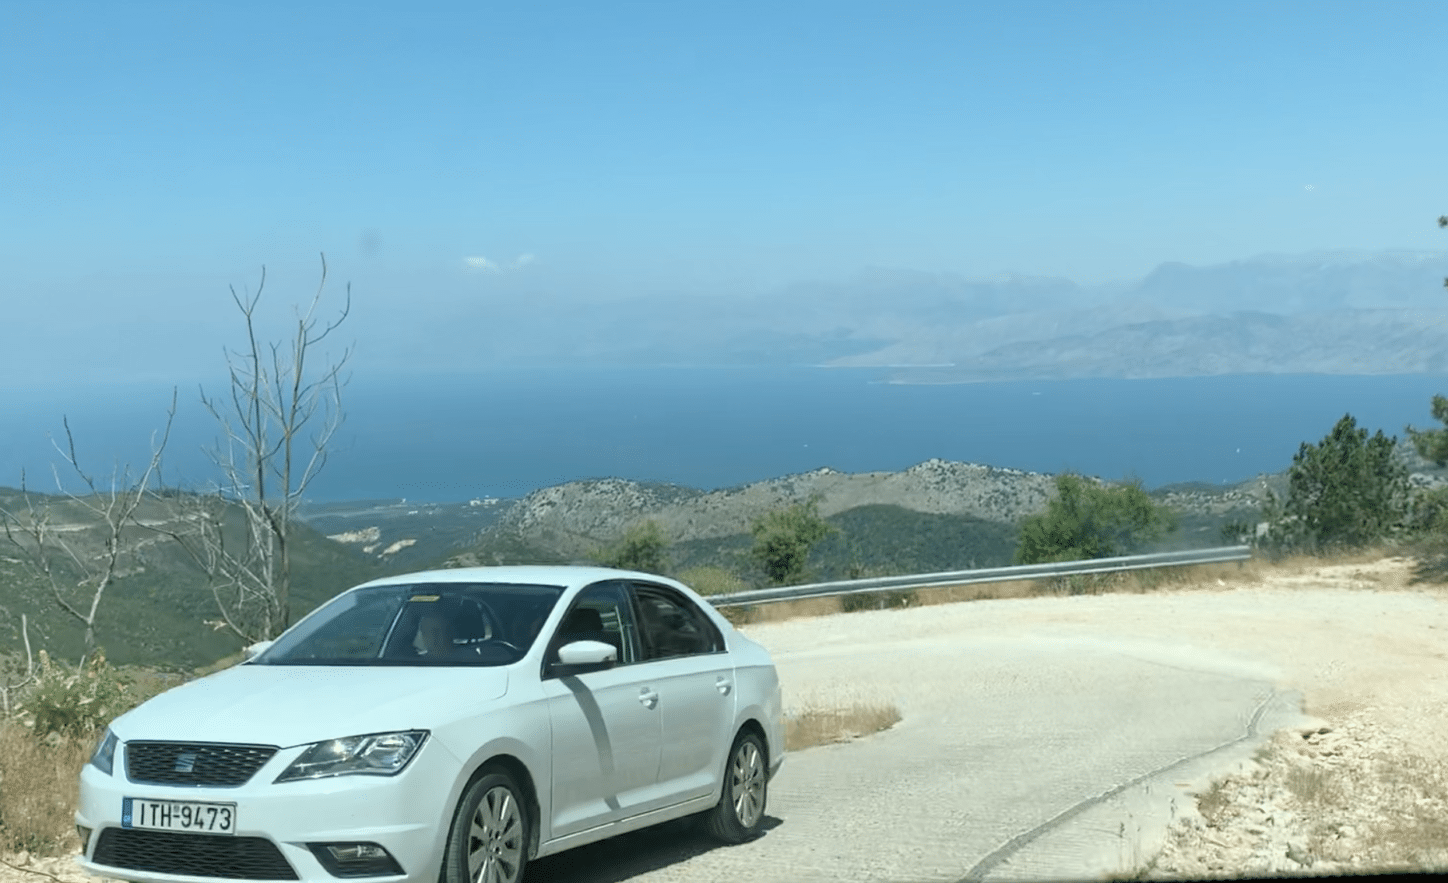 Three Days on Corfu